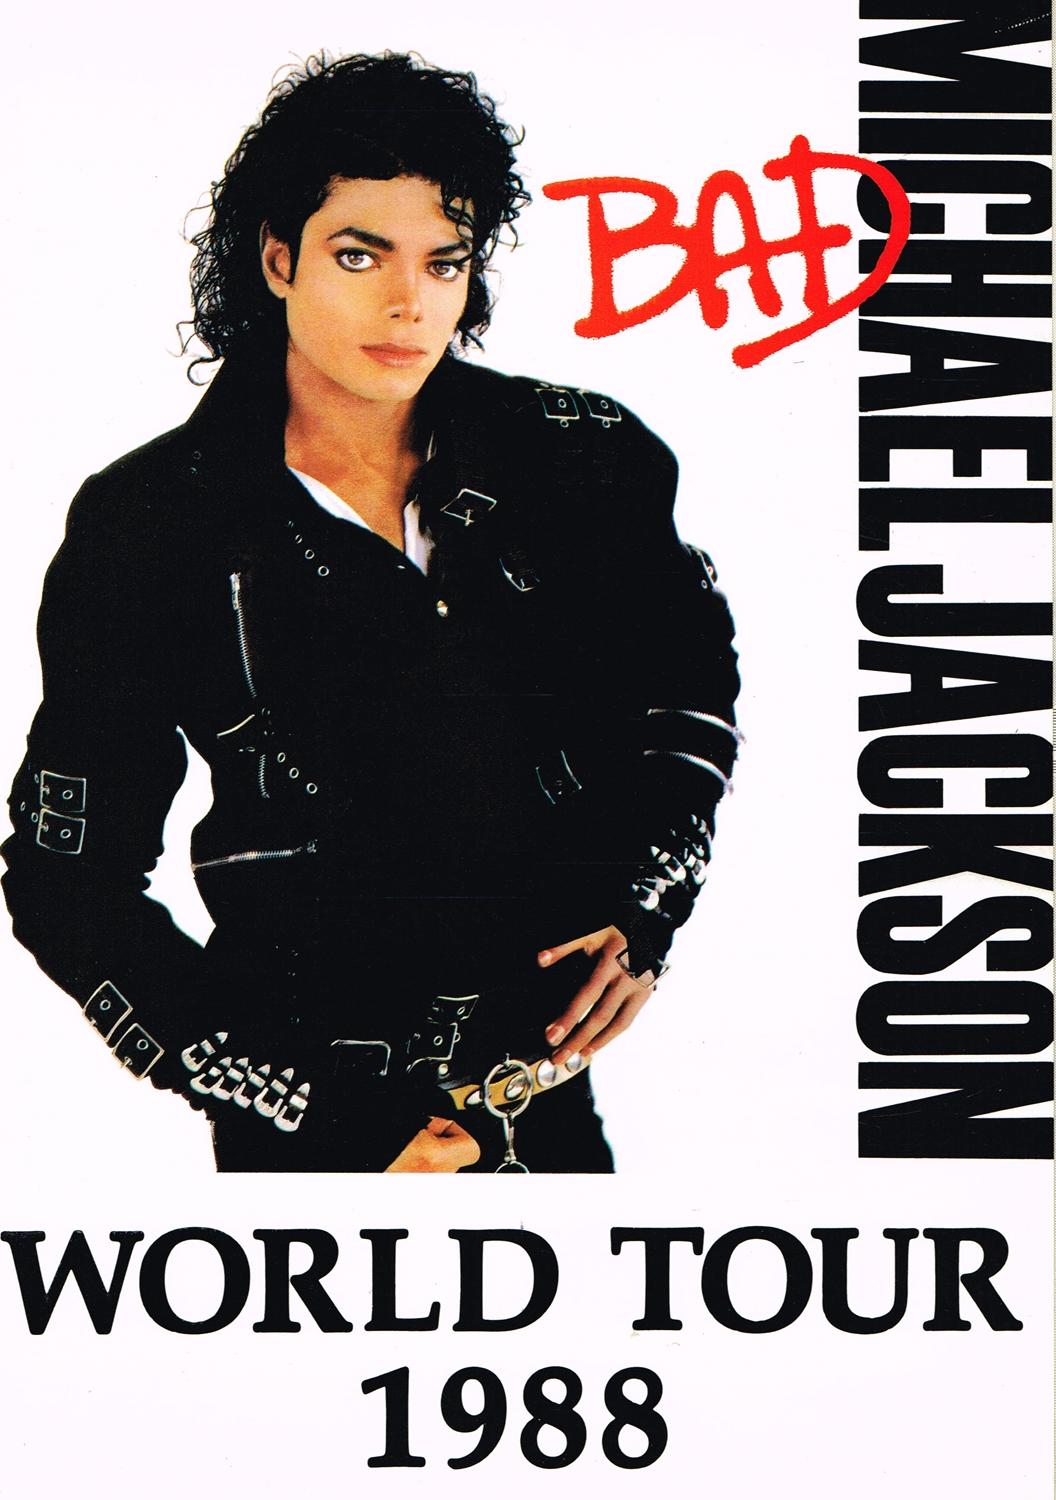 bad world tour 1988